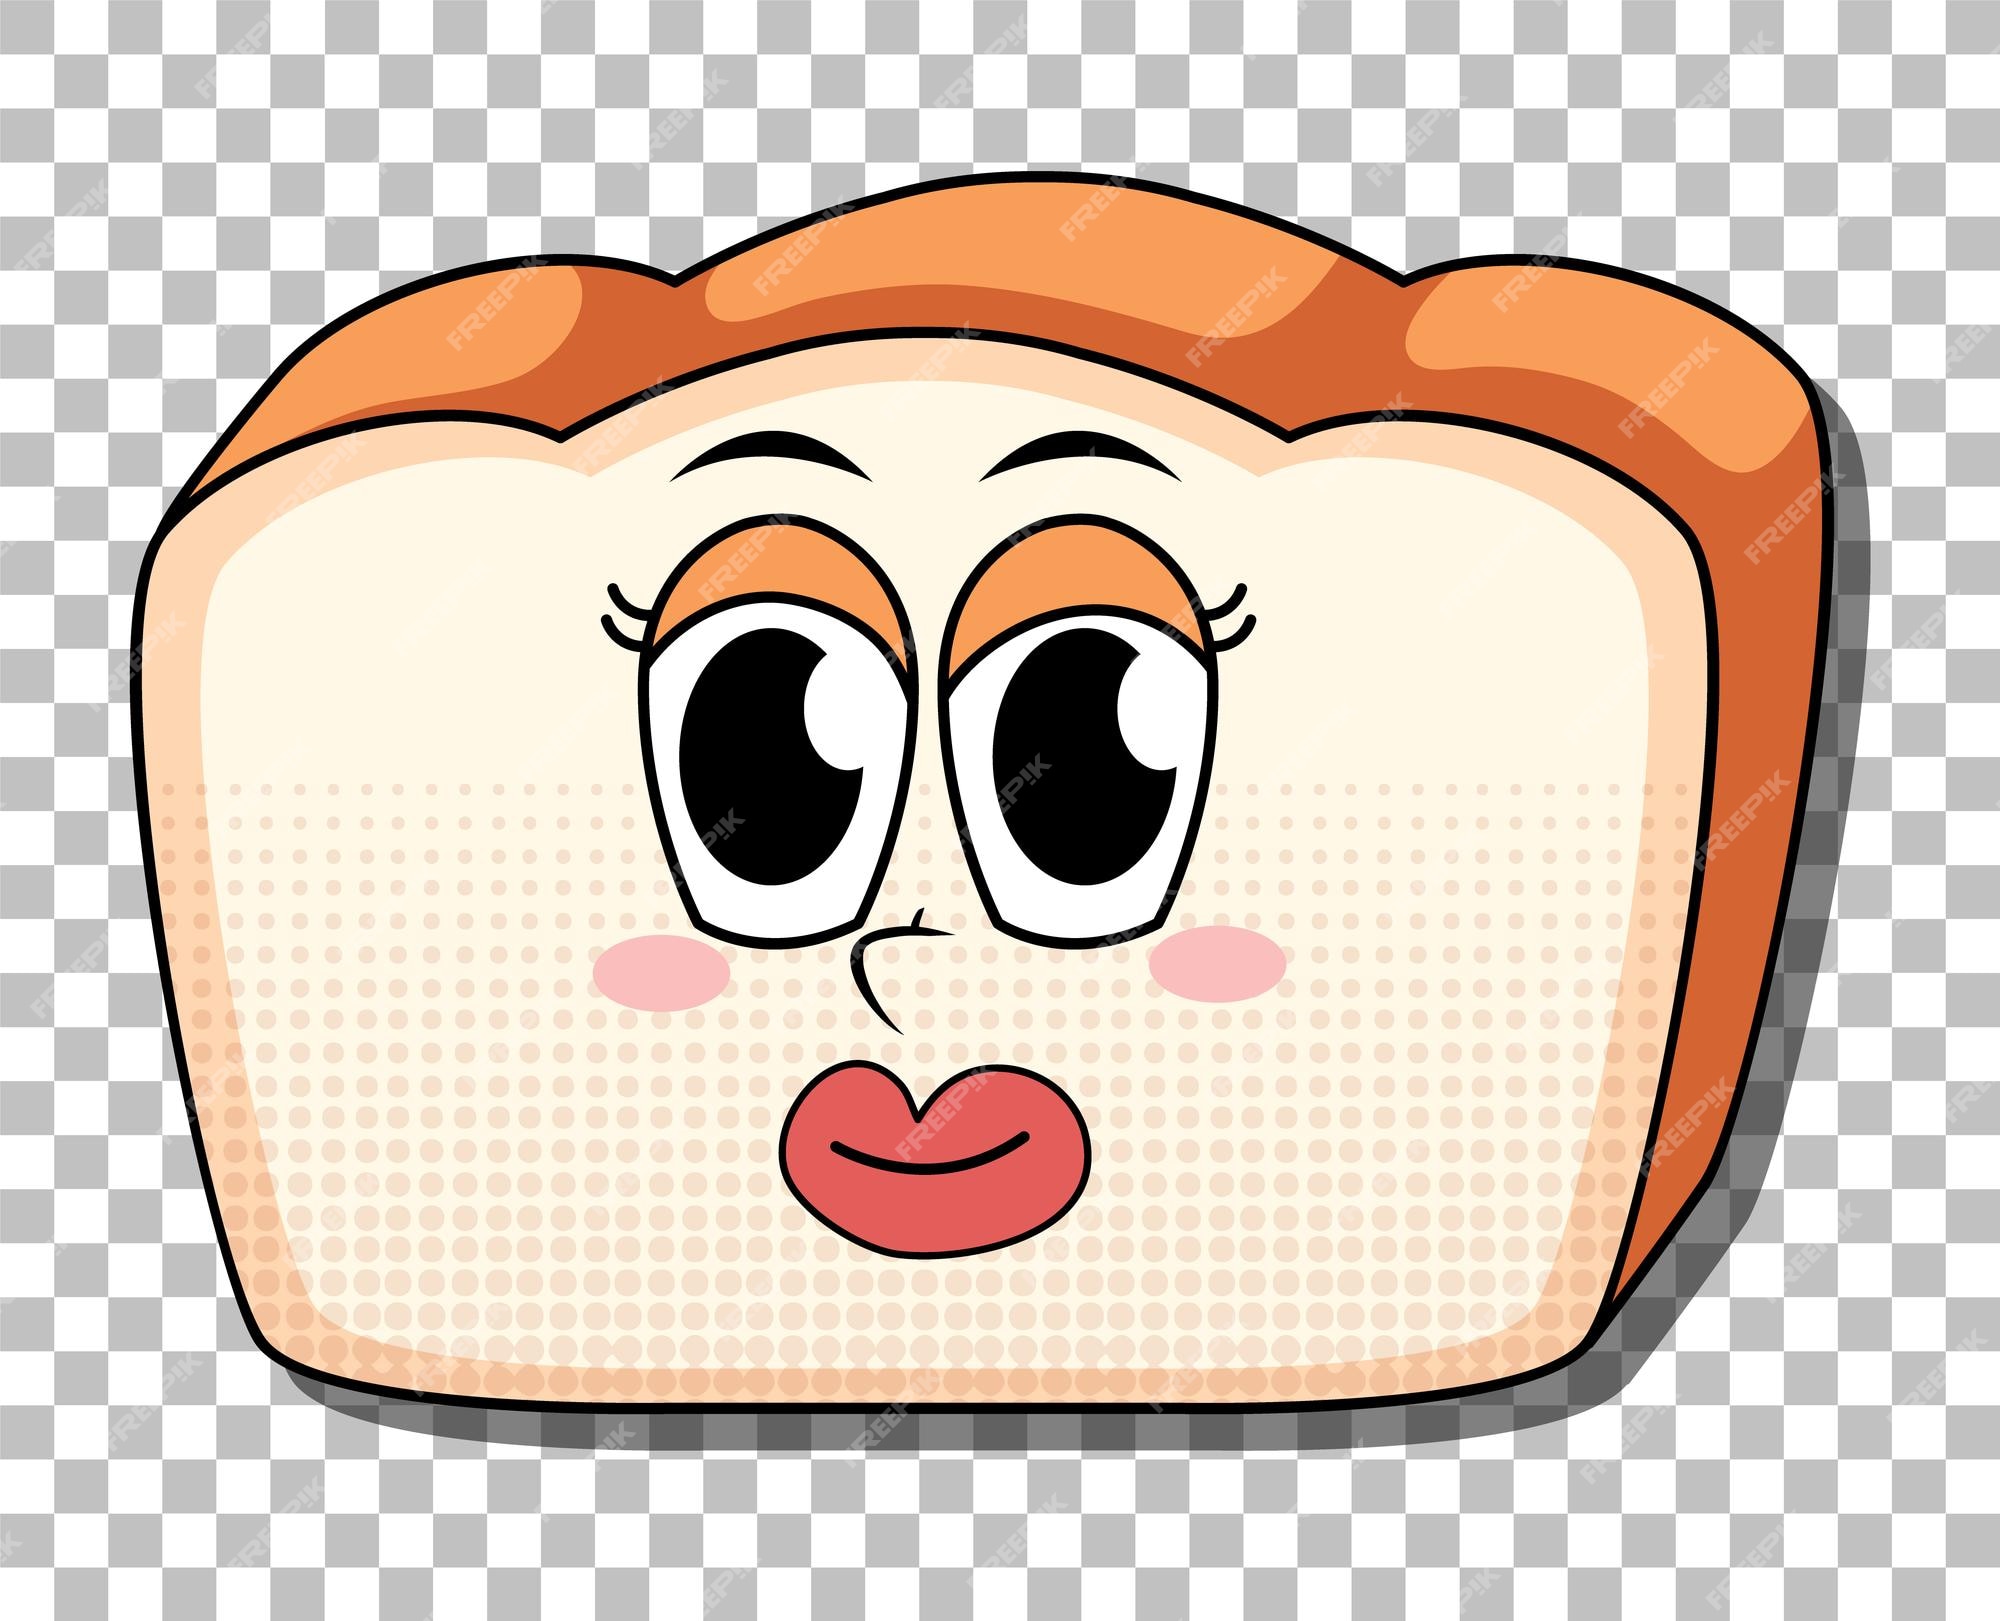 Free Vector | Bread cartoon character isolated